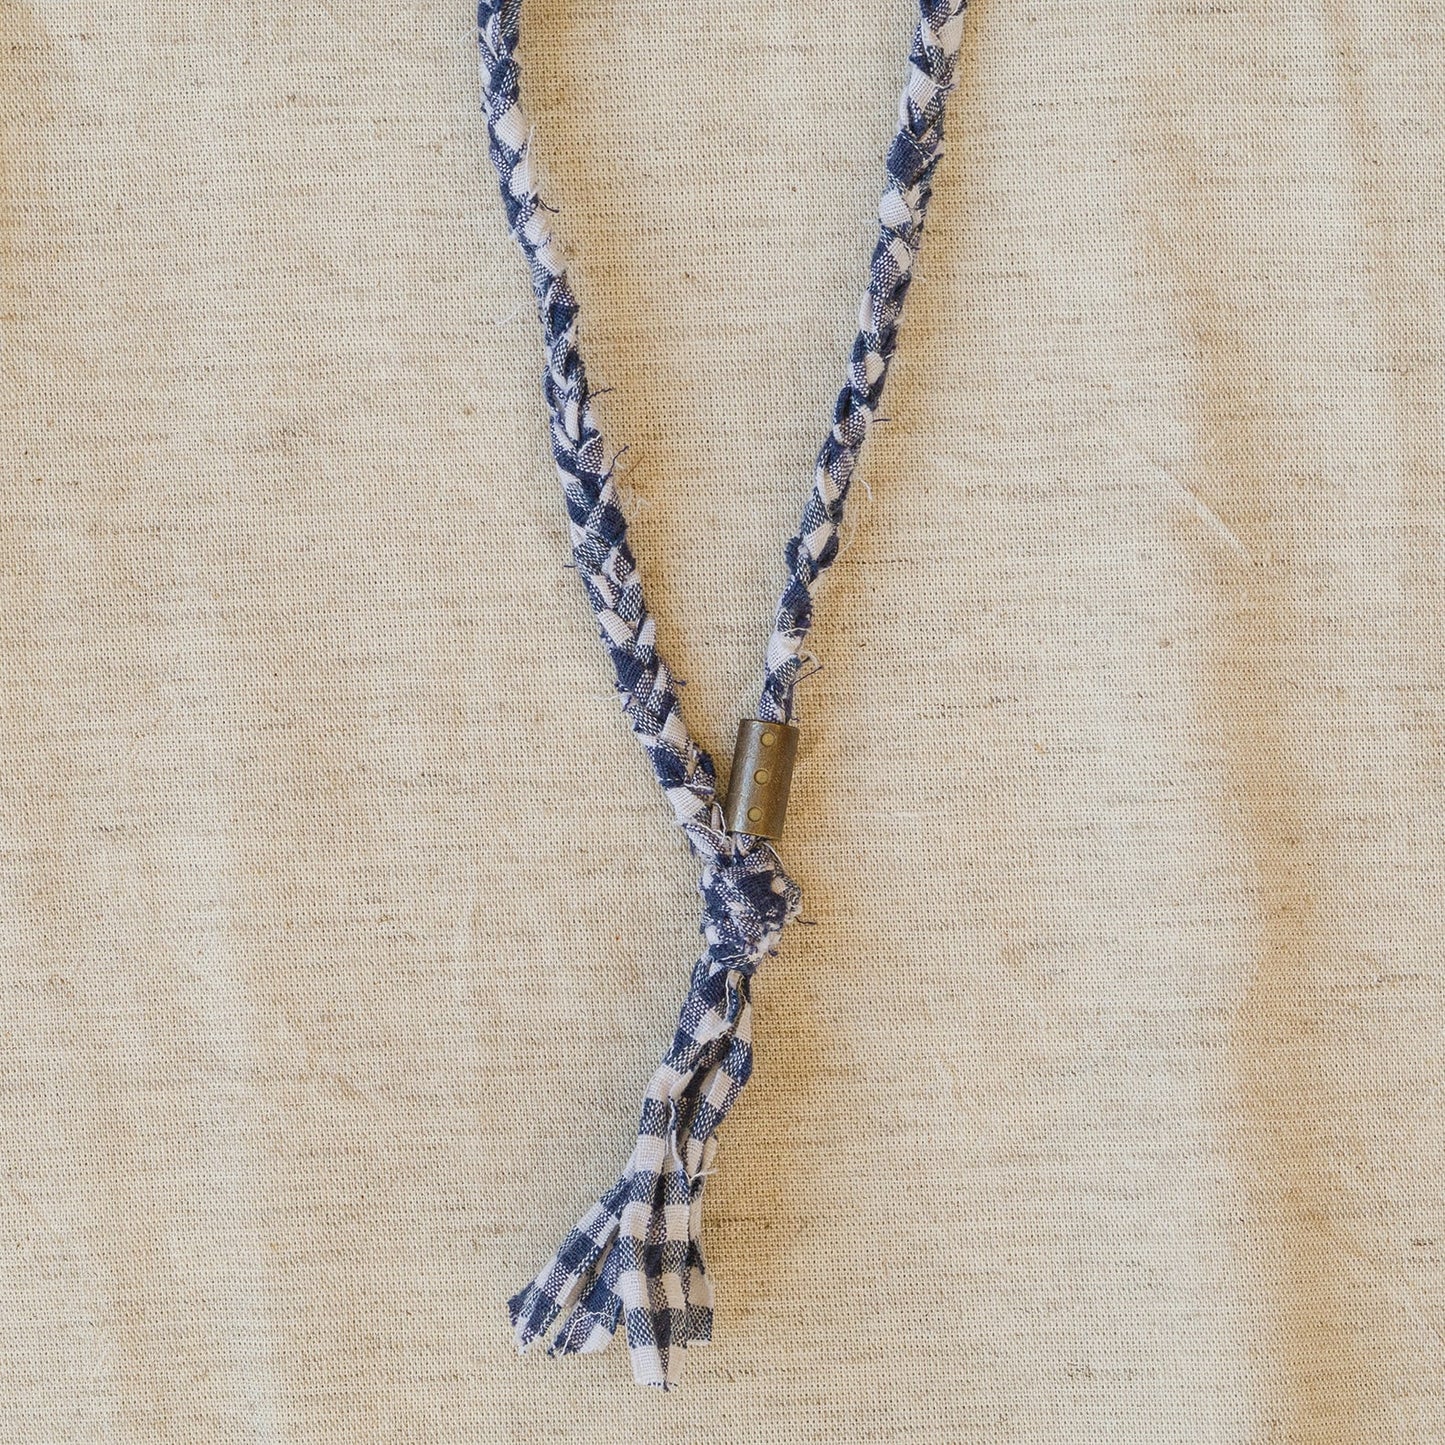 Borali - Irruo braided necklace BC-GR902